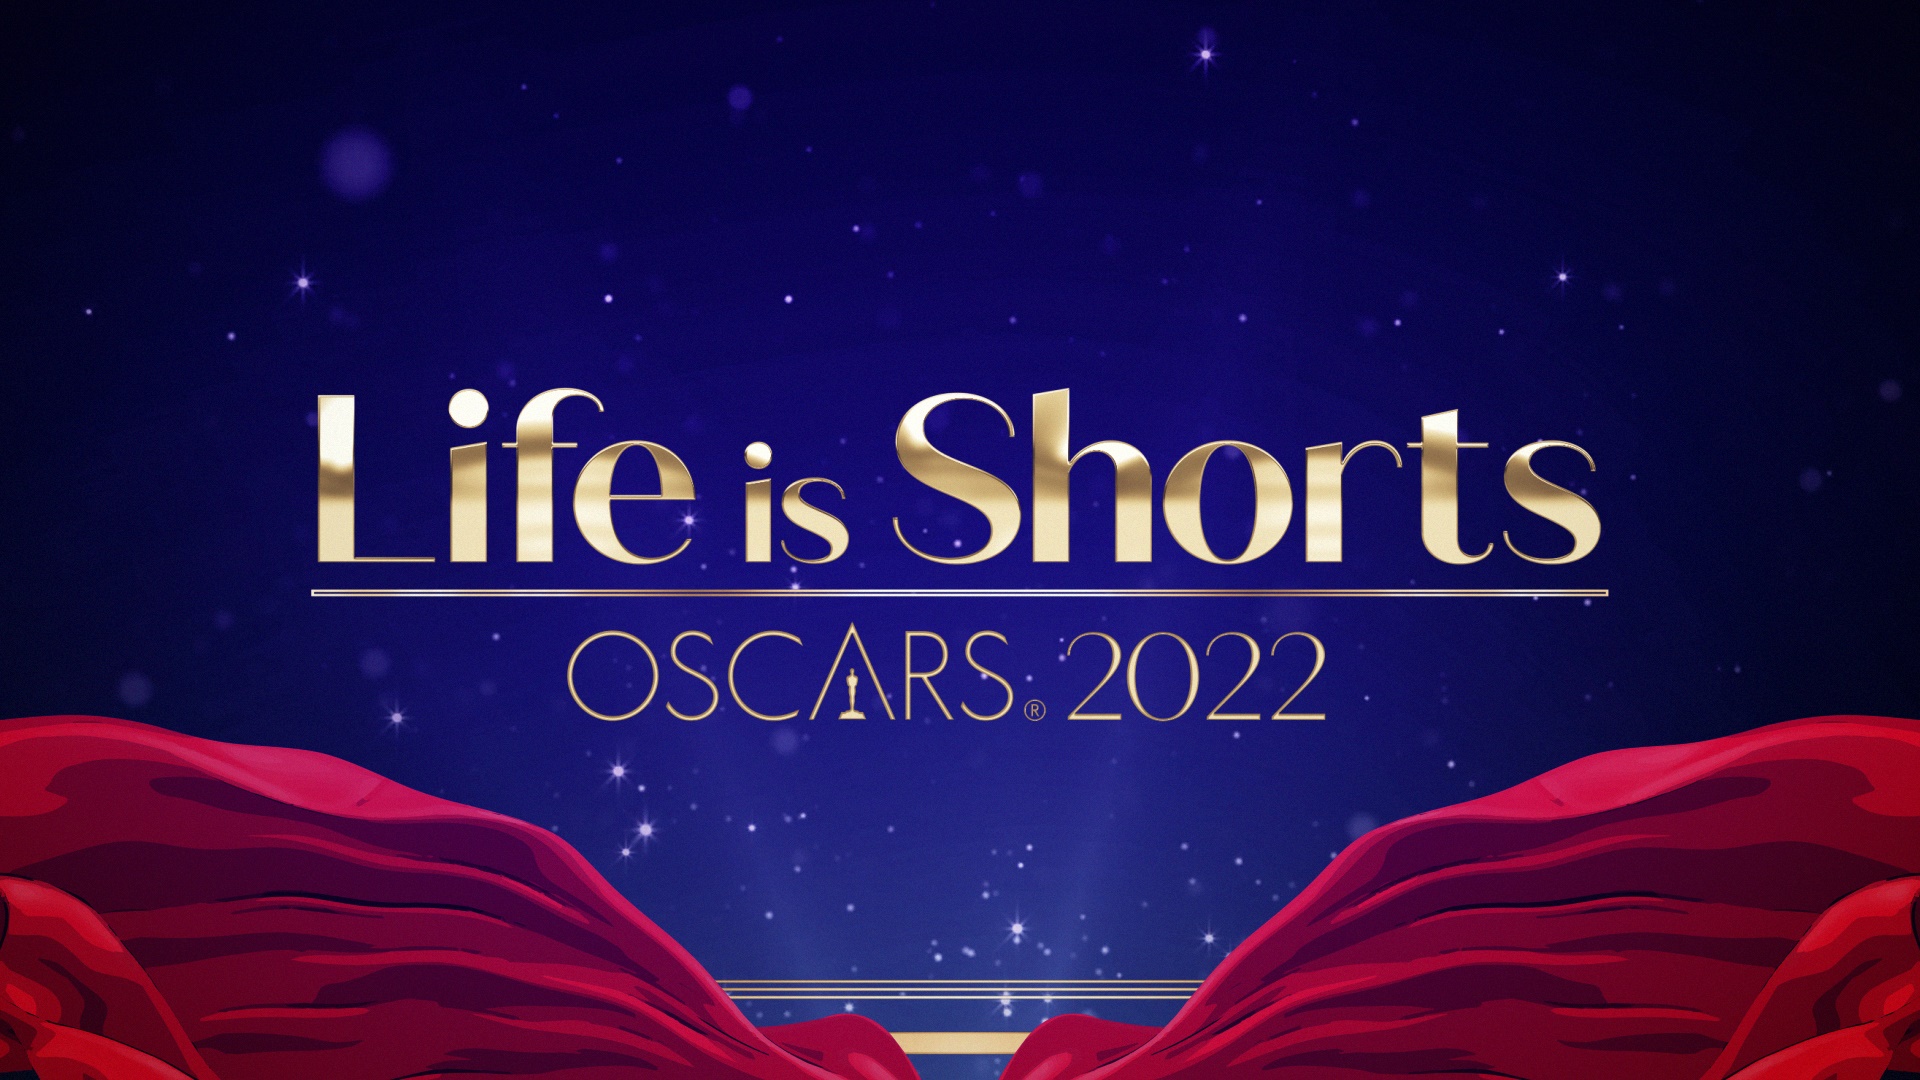 Disney Announces Celebration of 94th Oscars with “Life is Shorts: Oscar 2022”